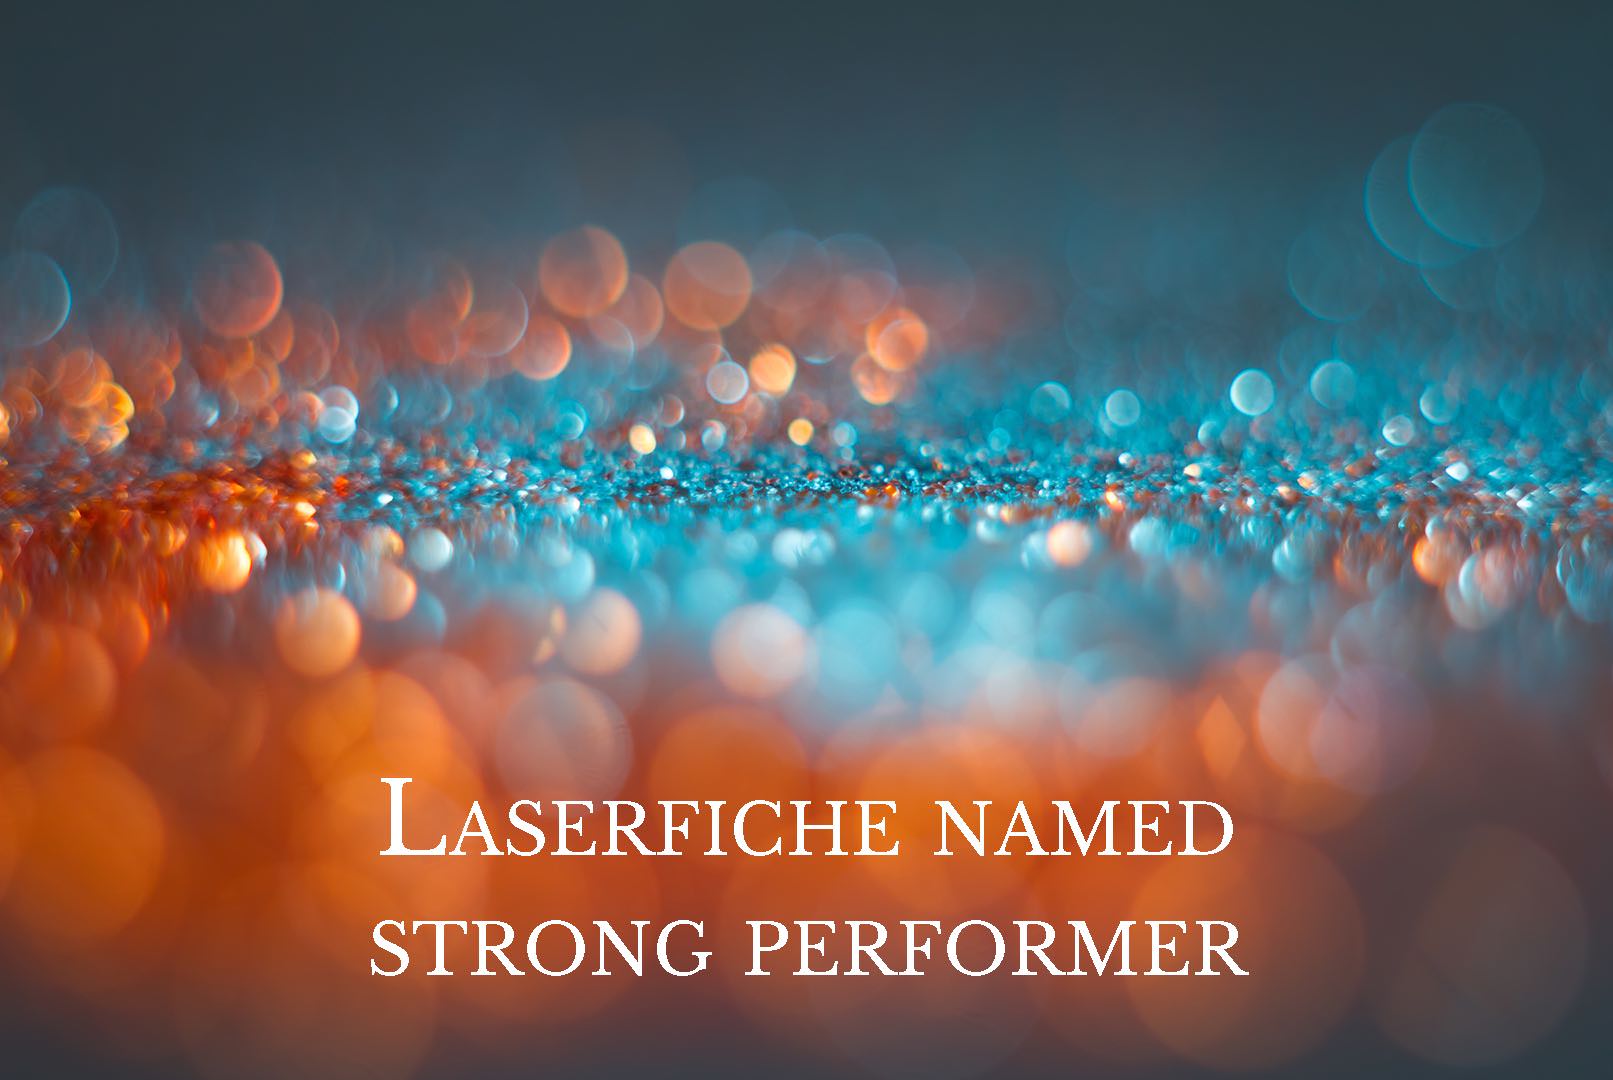 Laserfiche Named Strong Performer blog image